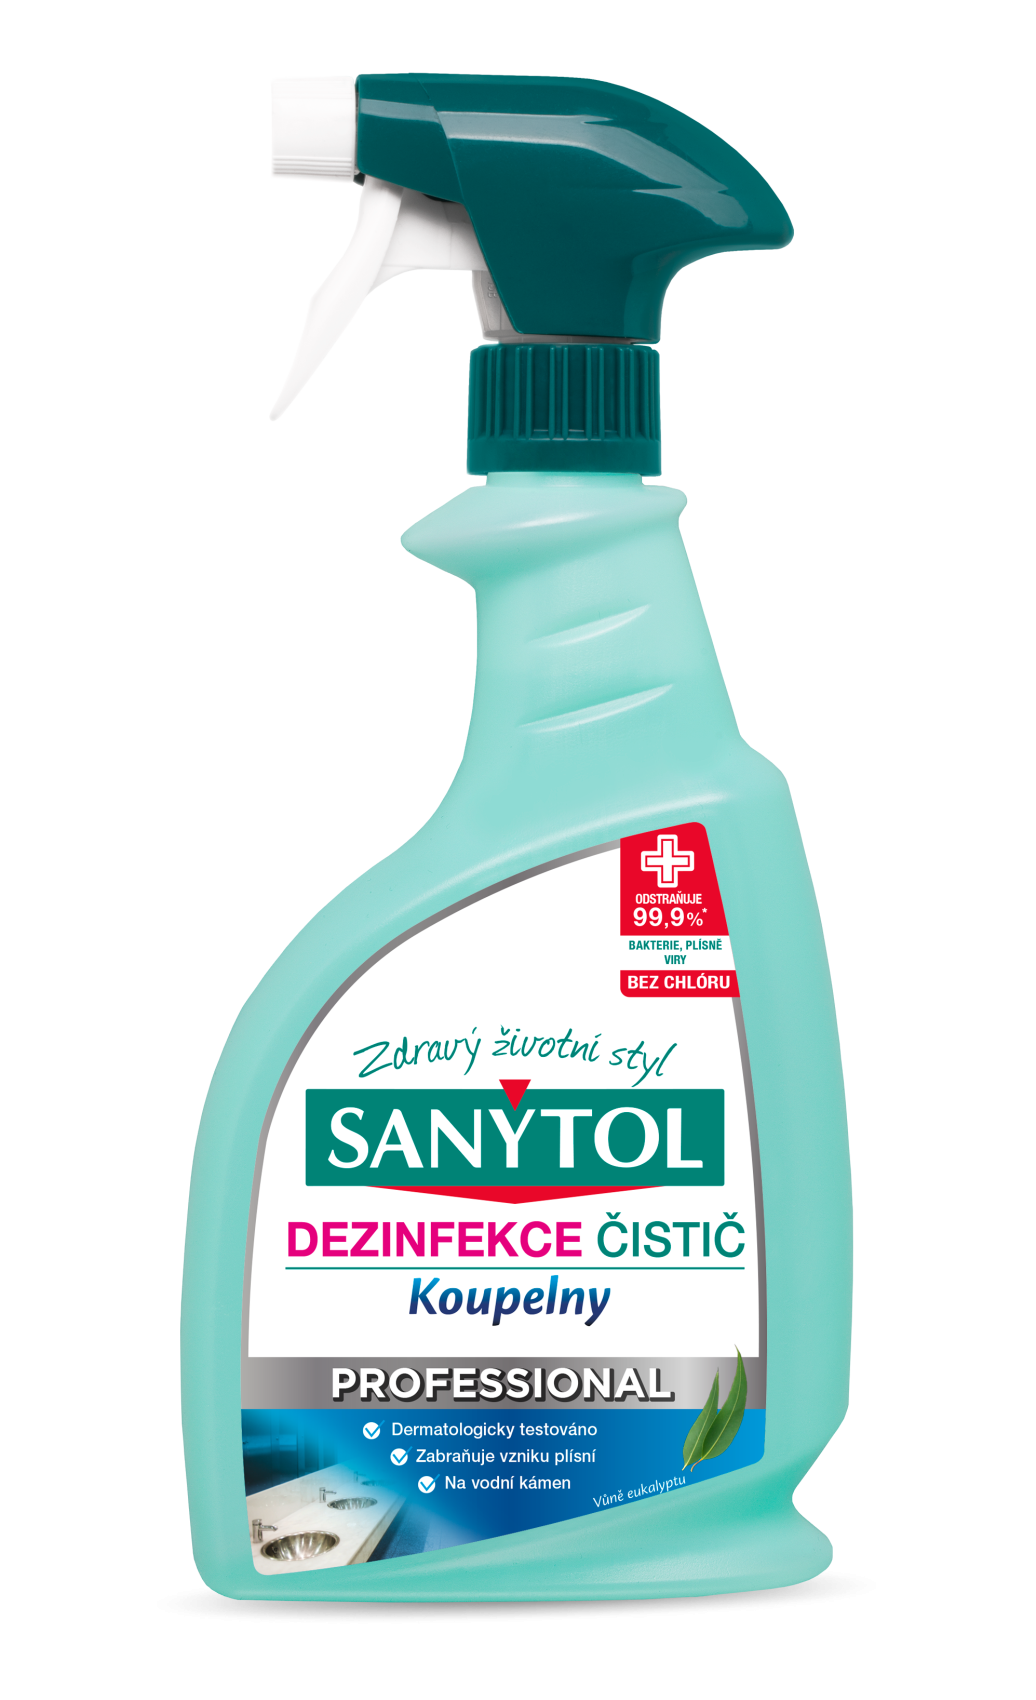 Sanytol Professional dezinfekce na koupelny 750ml